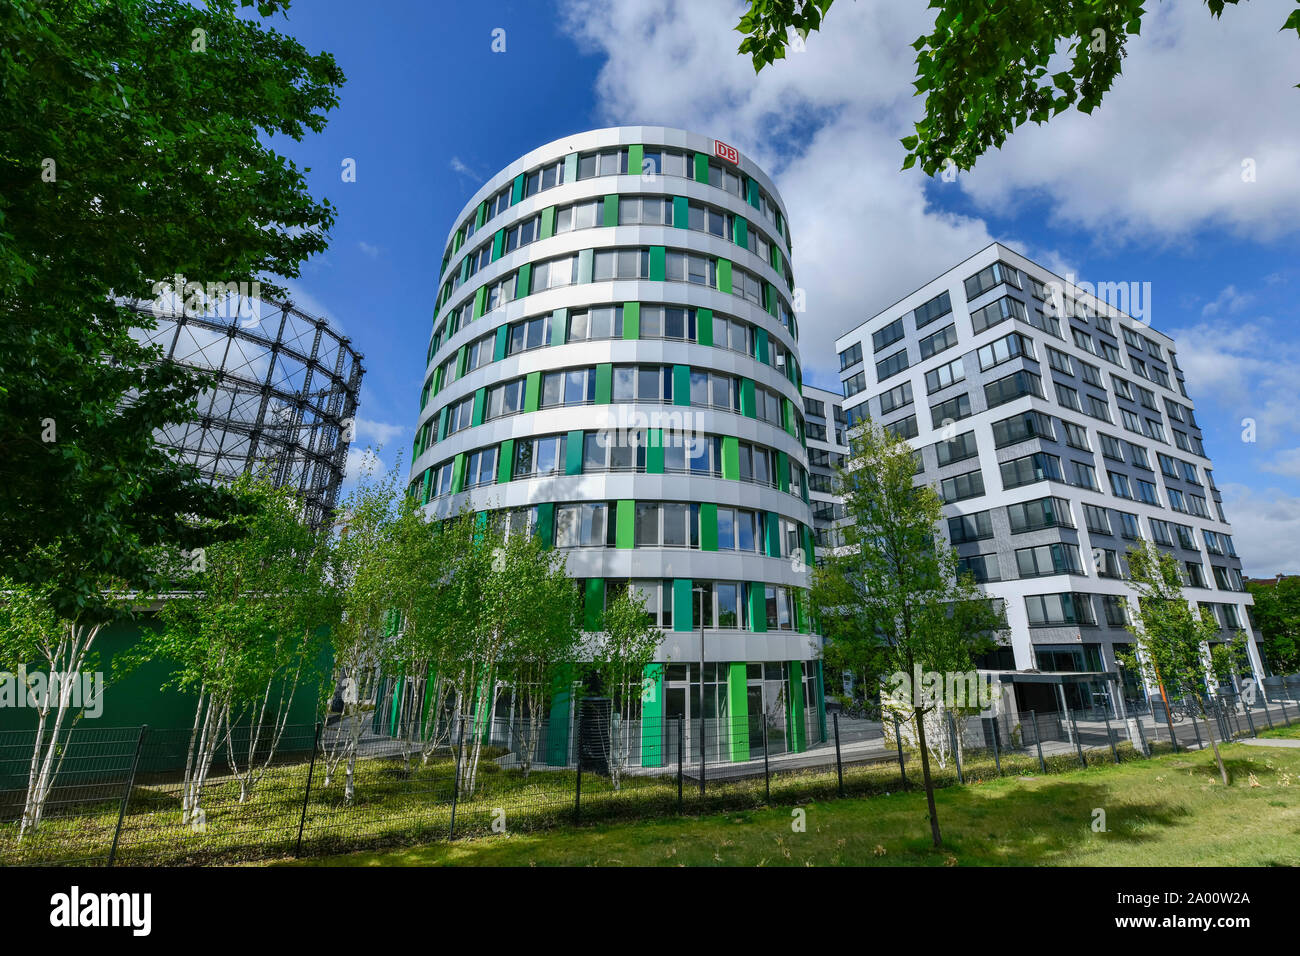 Gazomètre, Haus 8, Haus 7, EUREF-Campus, Schöneberg, Berlin, Deutschland Banque D'Images